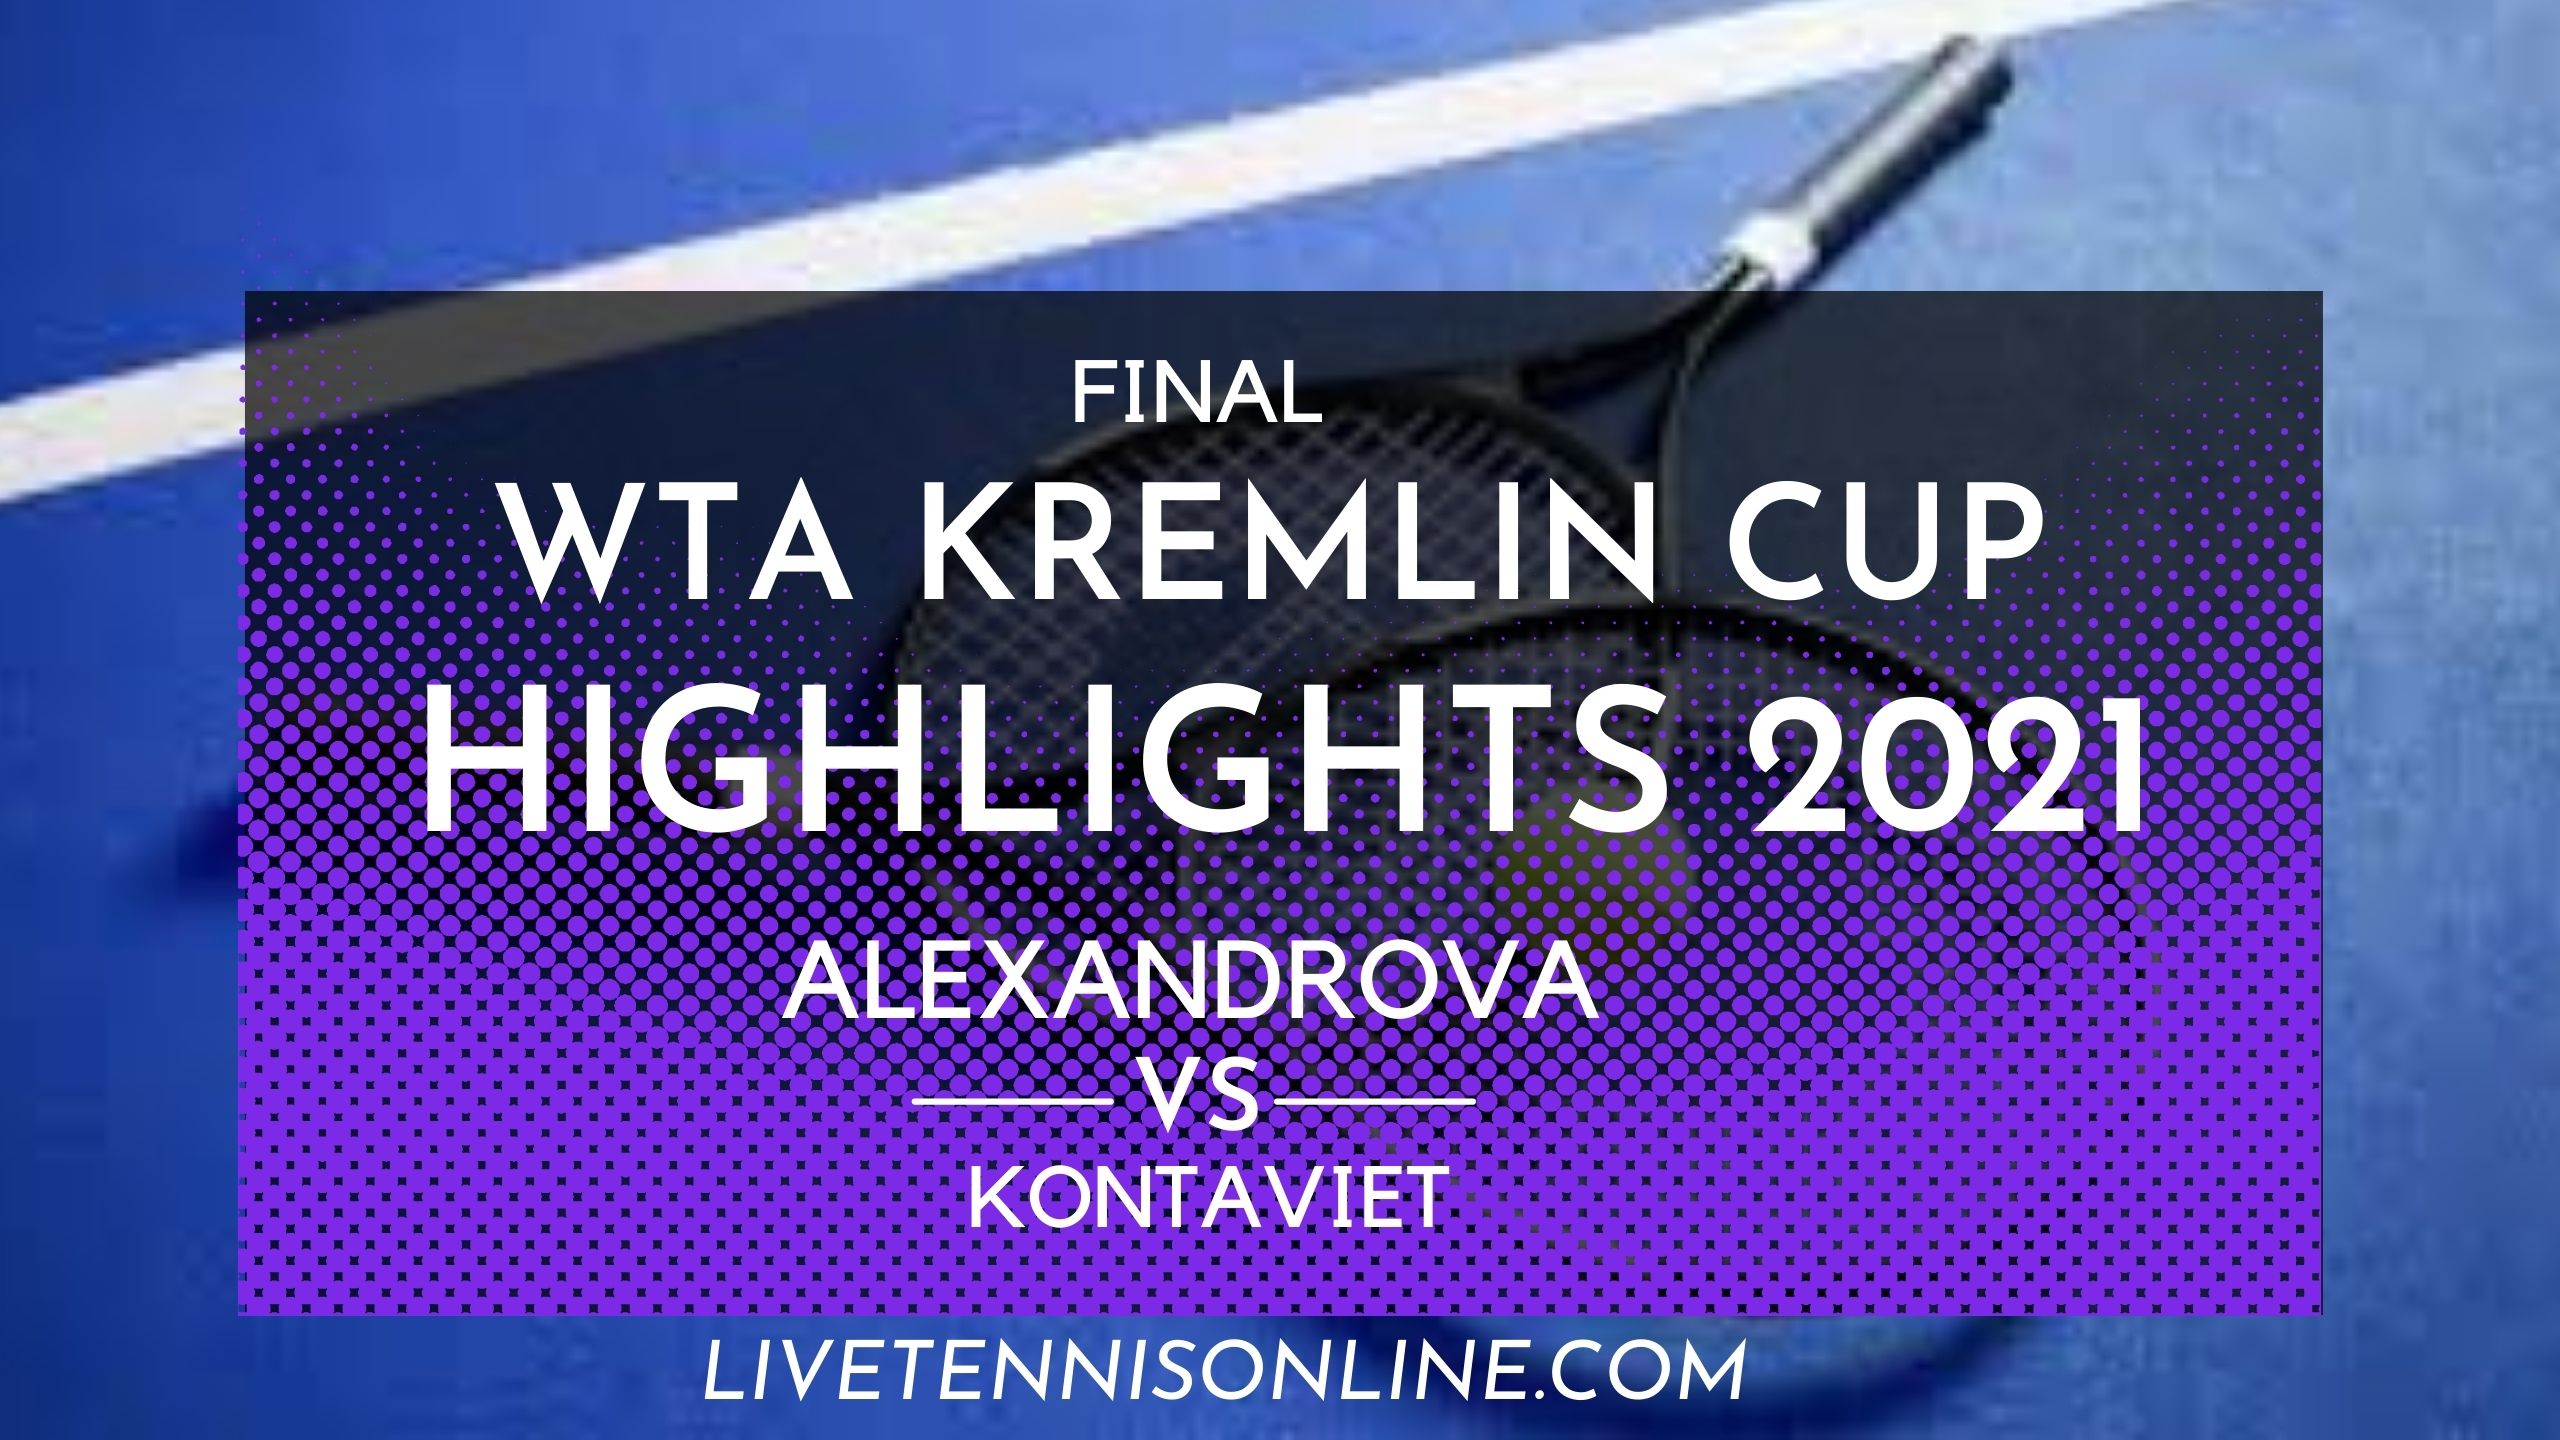 Alexandrova Vs Kontaveit Final Highlights 2021